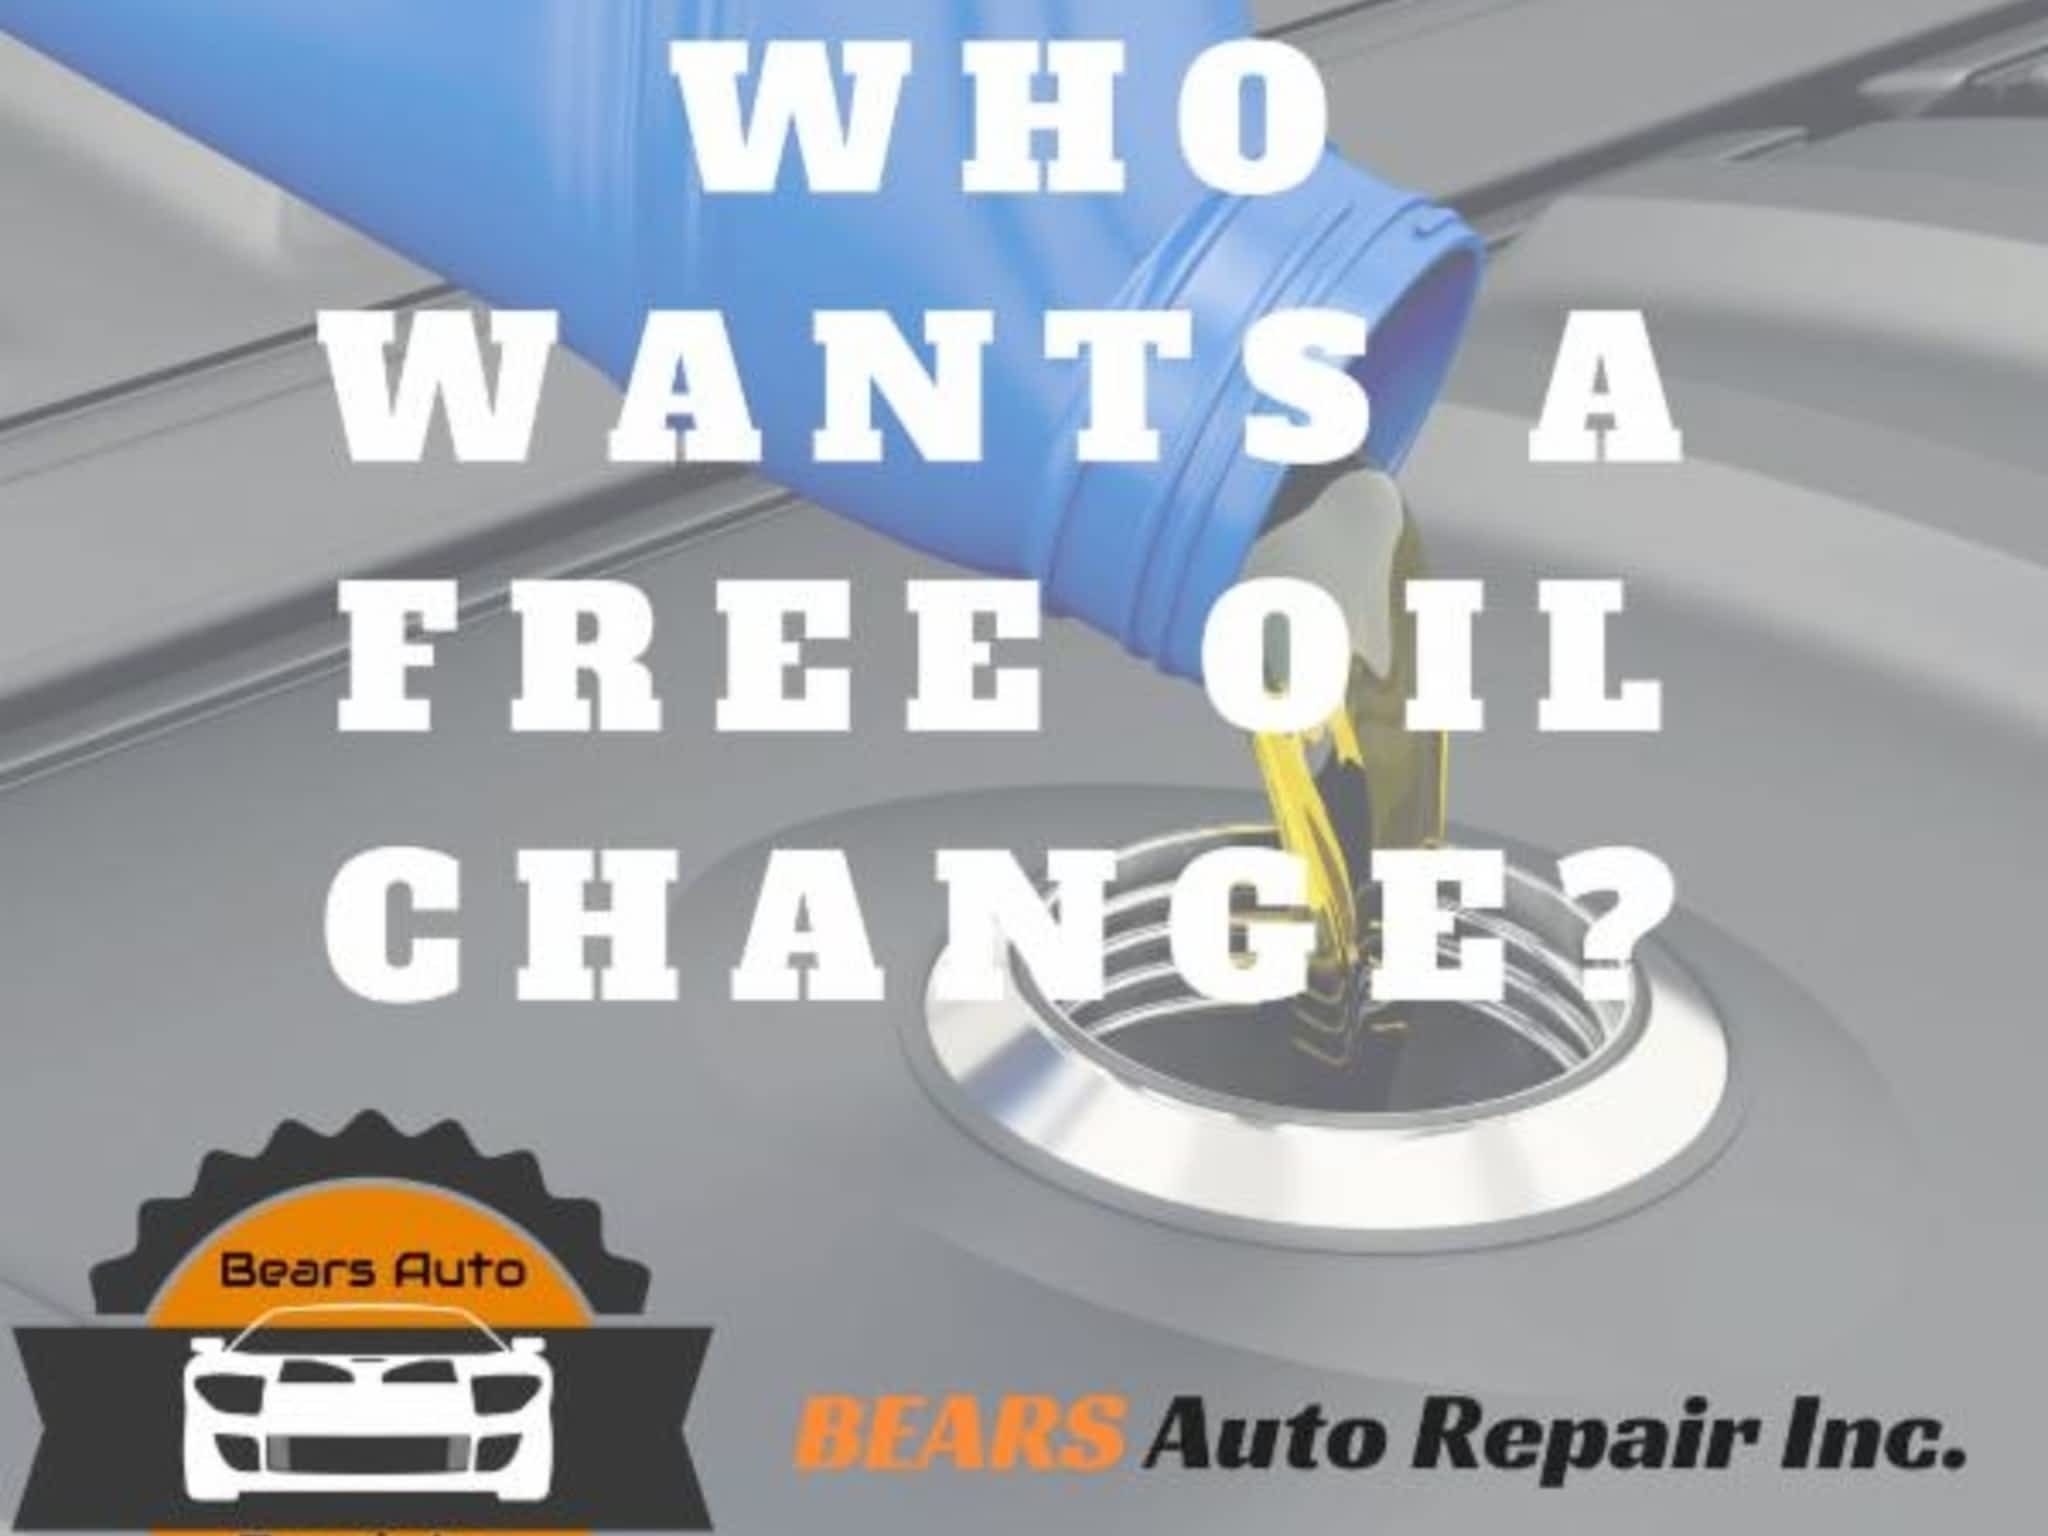 photo Bears Auto Repair Inc